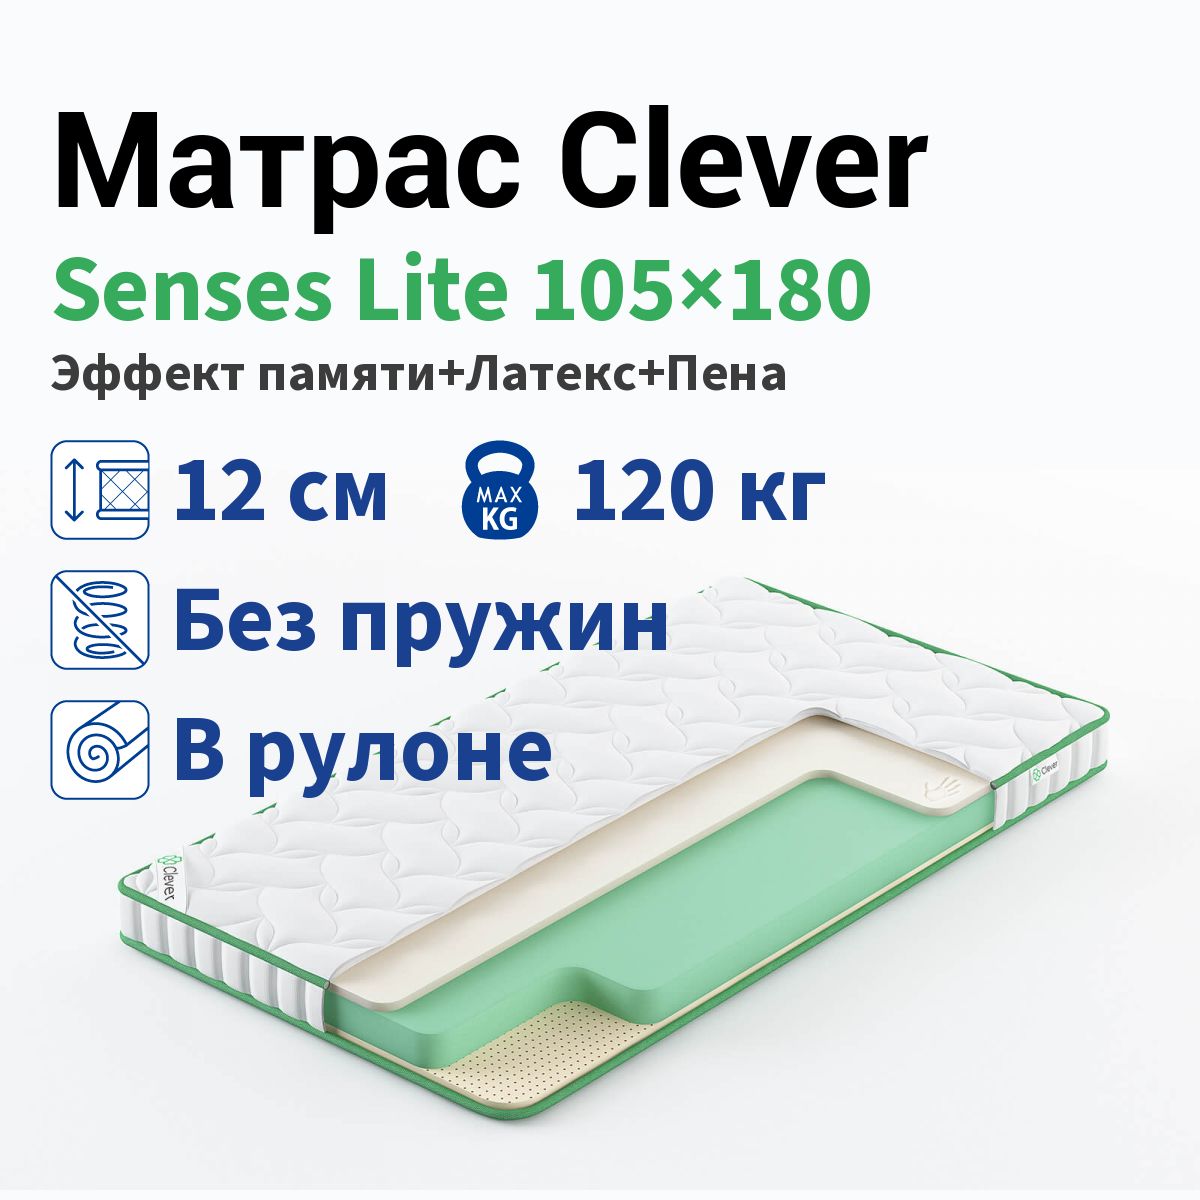 Матрас Clever Senses Lite размером 105 на 180 сантиметров.